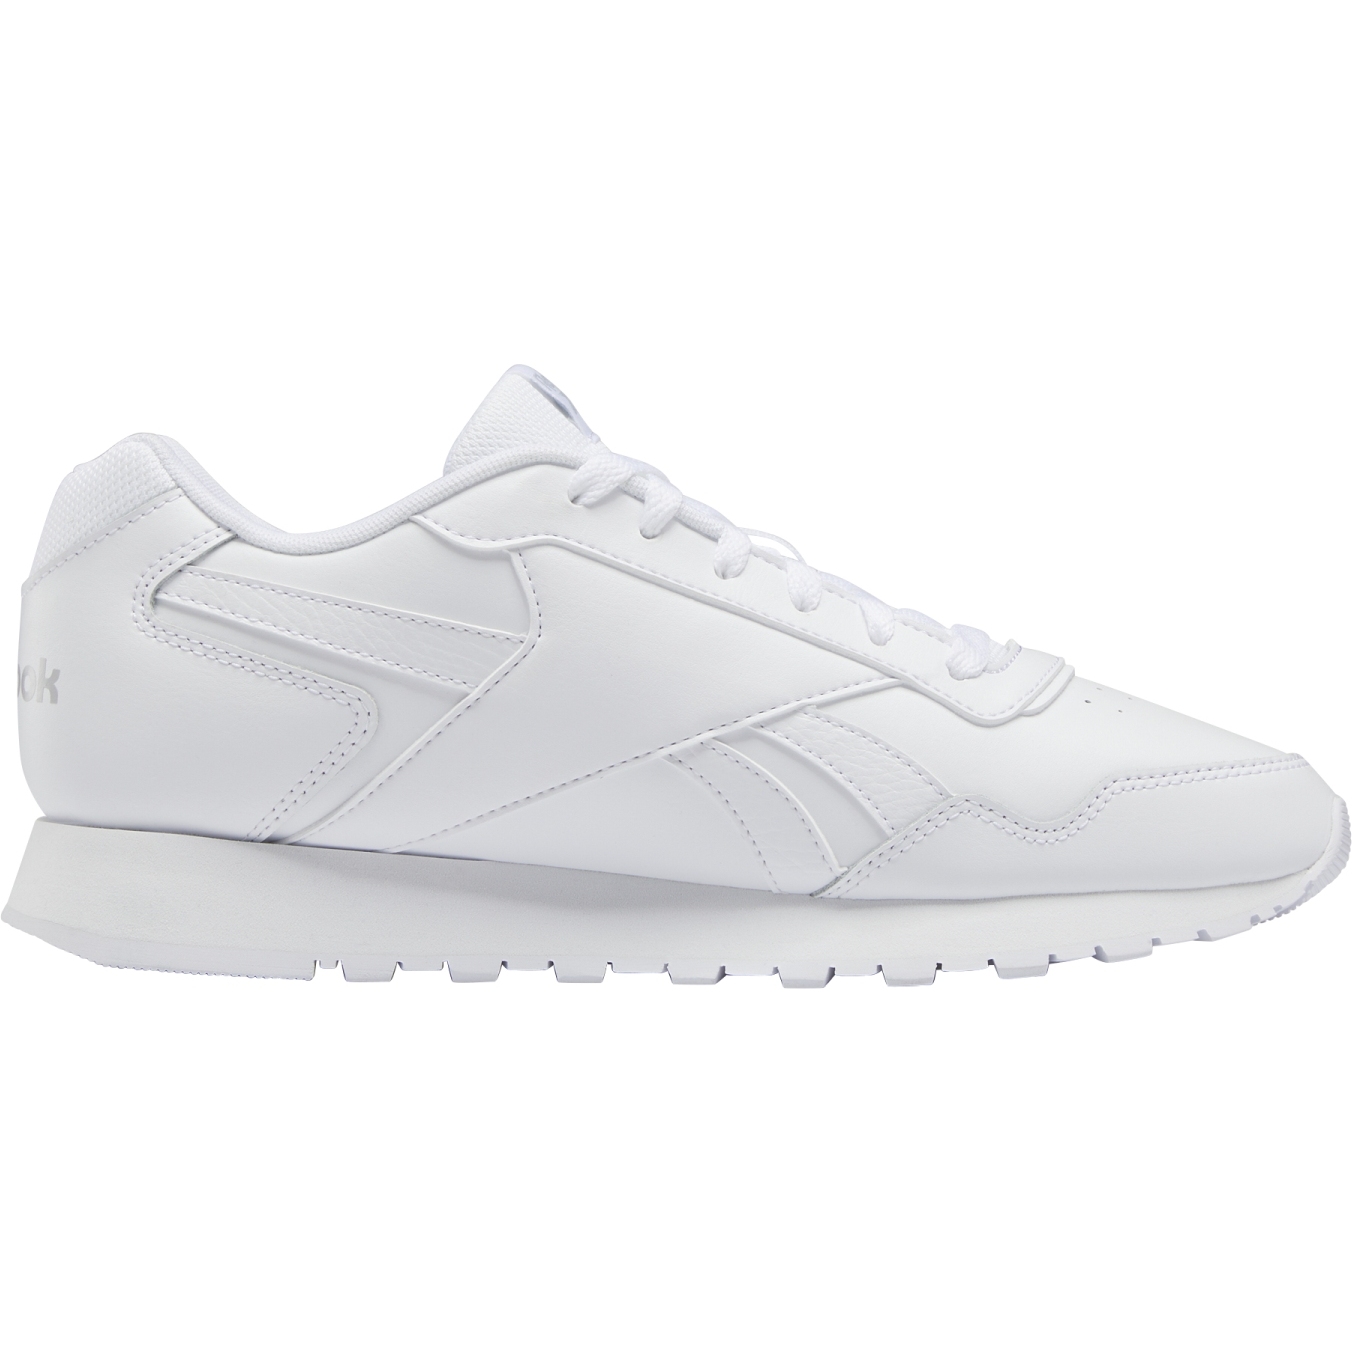 Classic Nylon Shoes - Ftwr White / Ftwr White / Ftwr White | Reebok